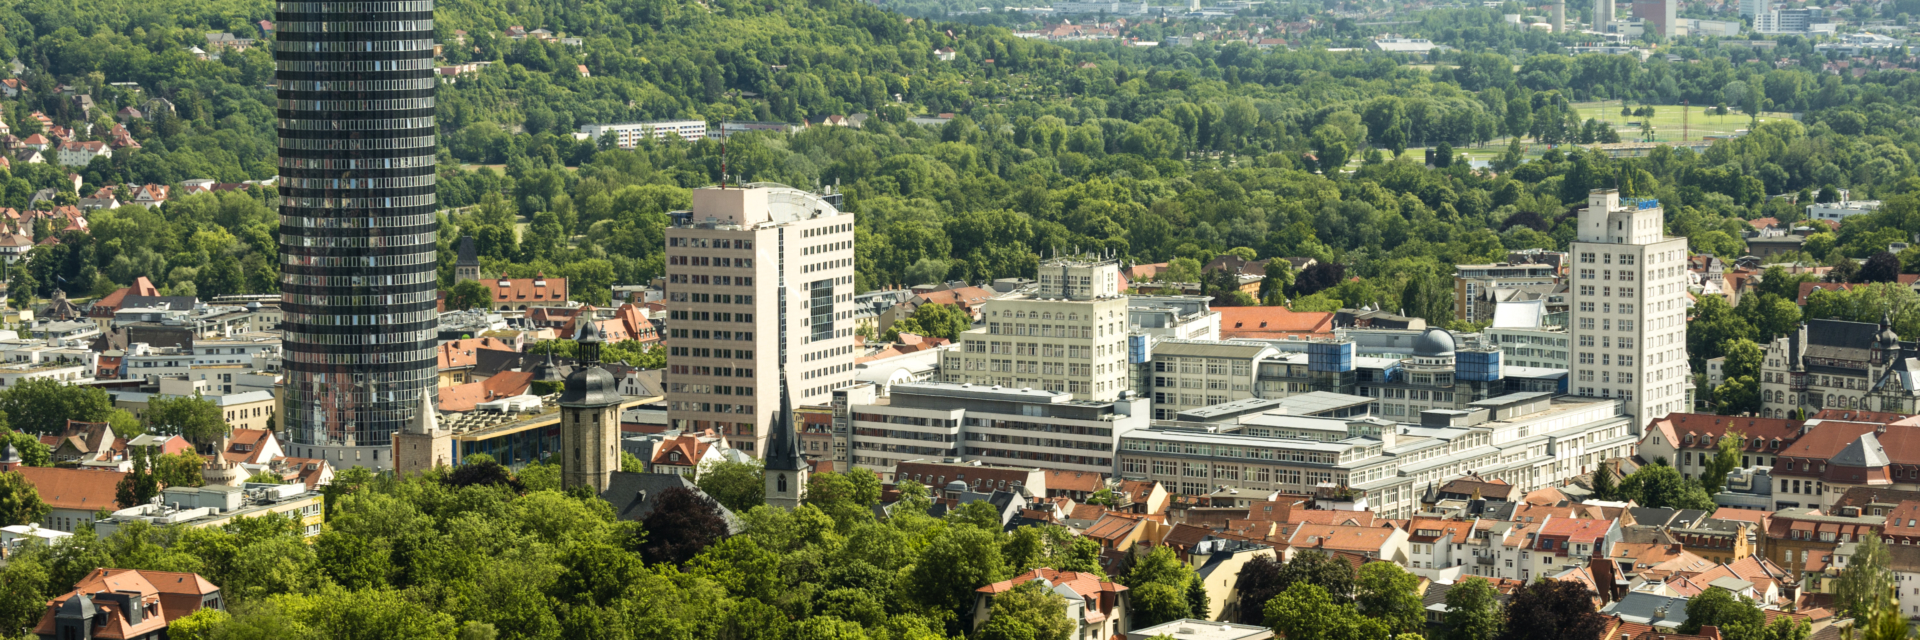 Luftaufnahme der Tagungsstadt Jena - Fachbesuch in Jena © JenaKultur, Foto: Andreas Hub